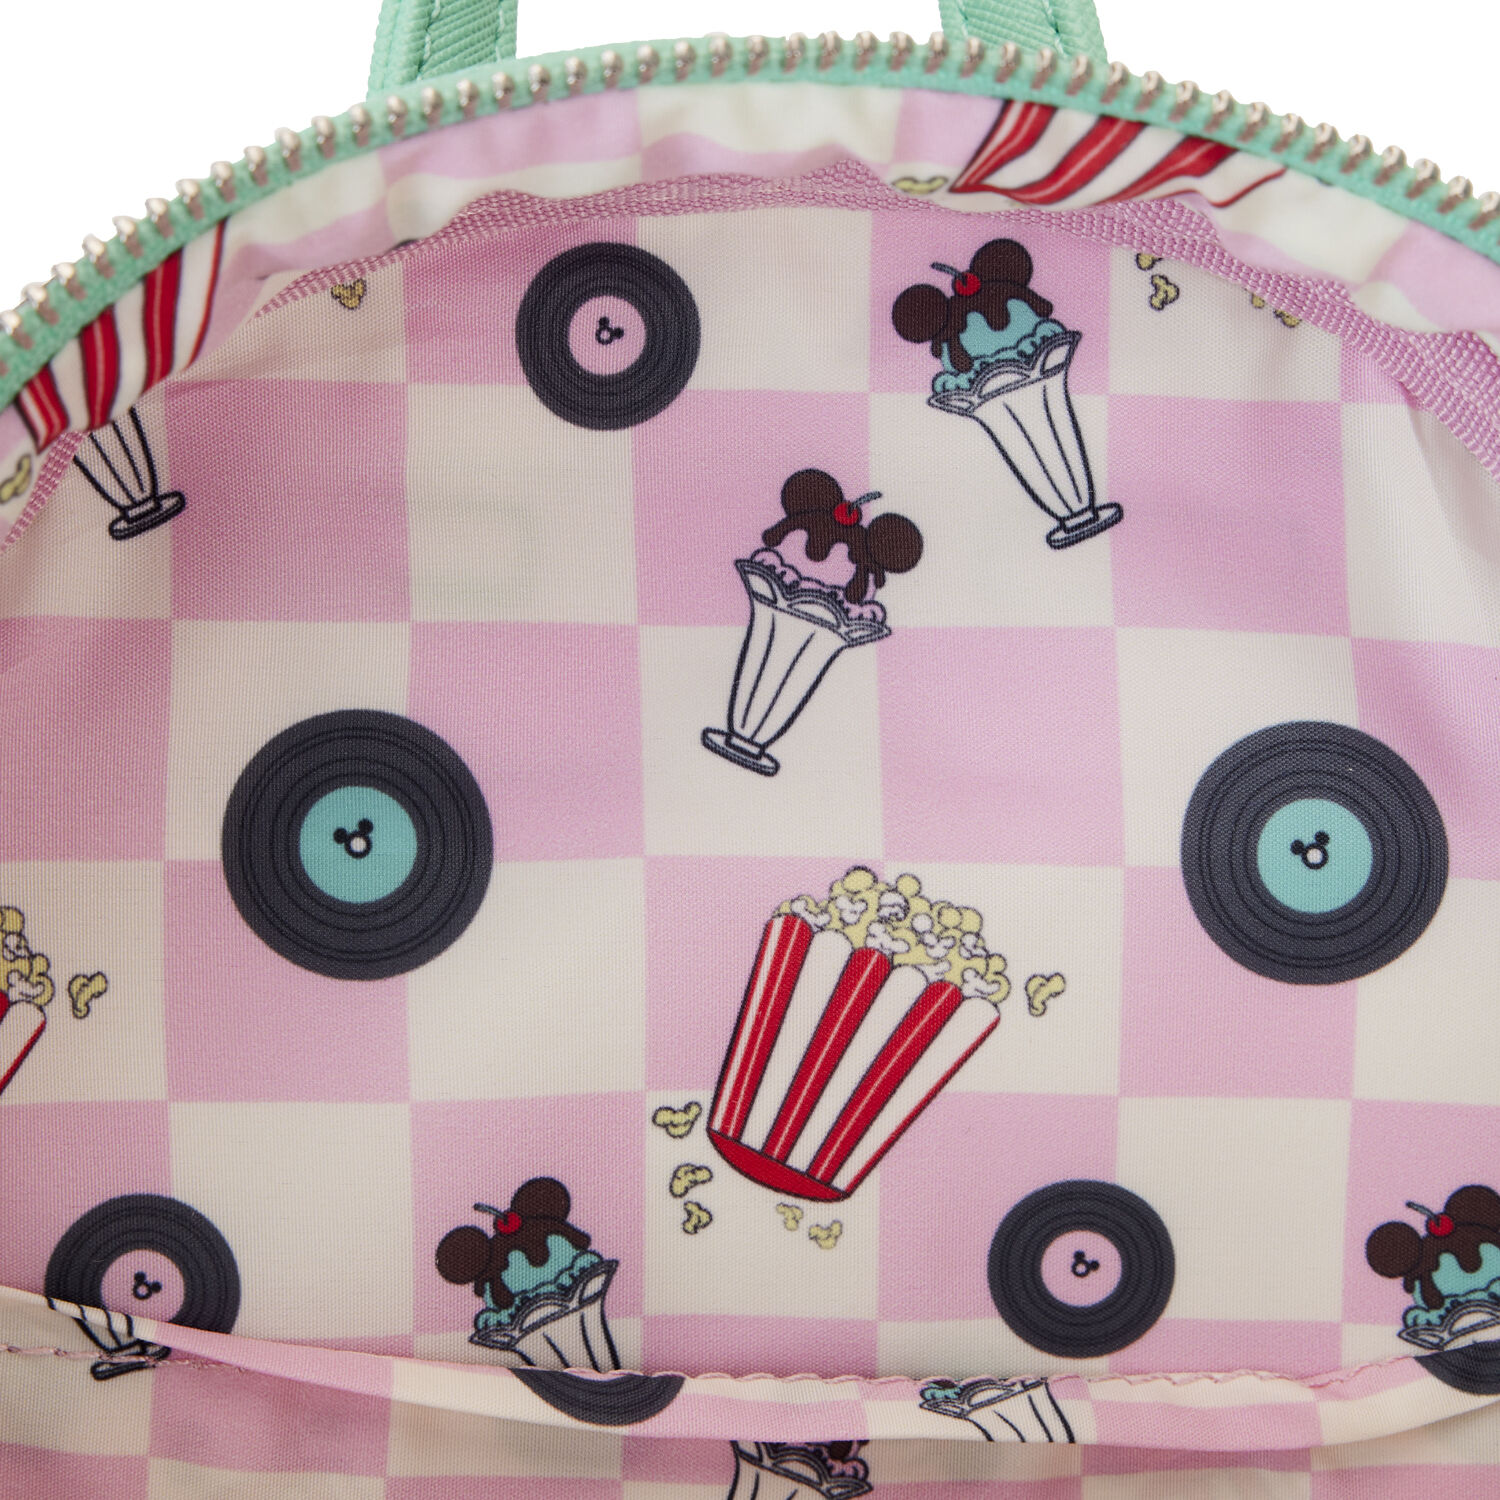 Mickey & Minnie Date Night Drive-In Lenticular Mini Backpack